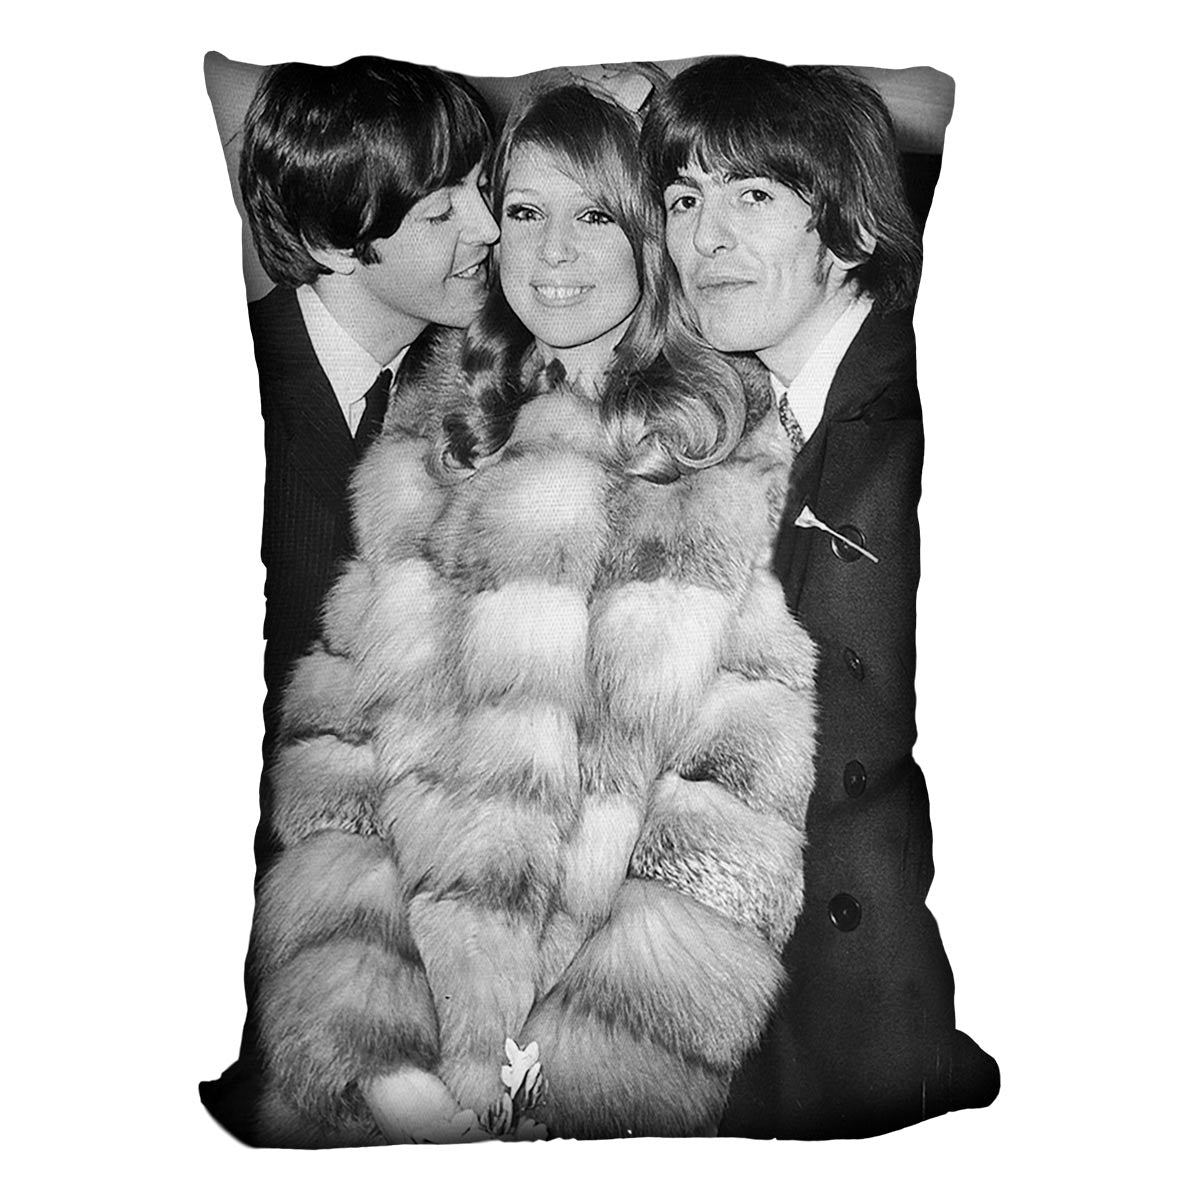 George Harrison and Pattie Boyds wedding with Paul McCartney Cushion